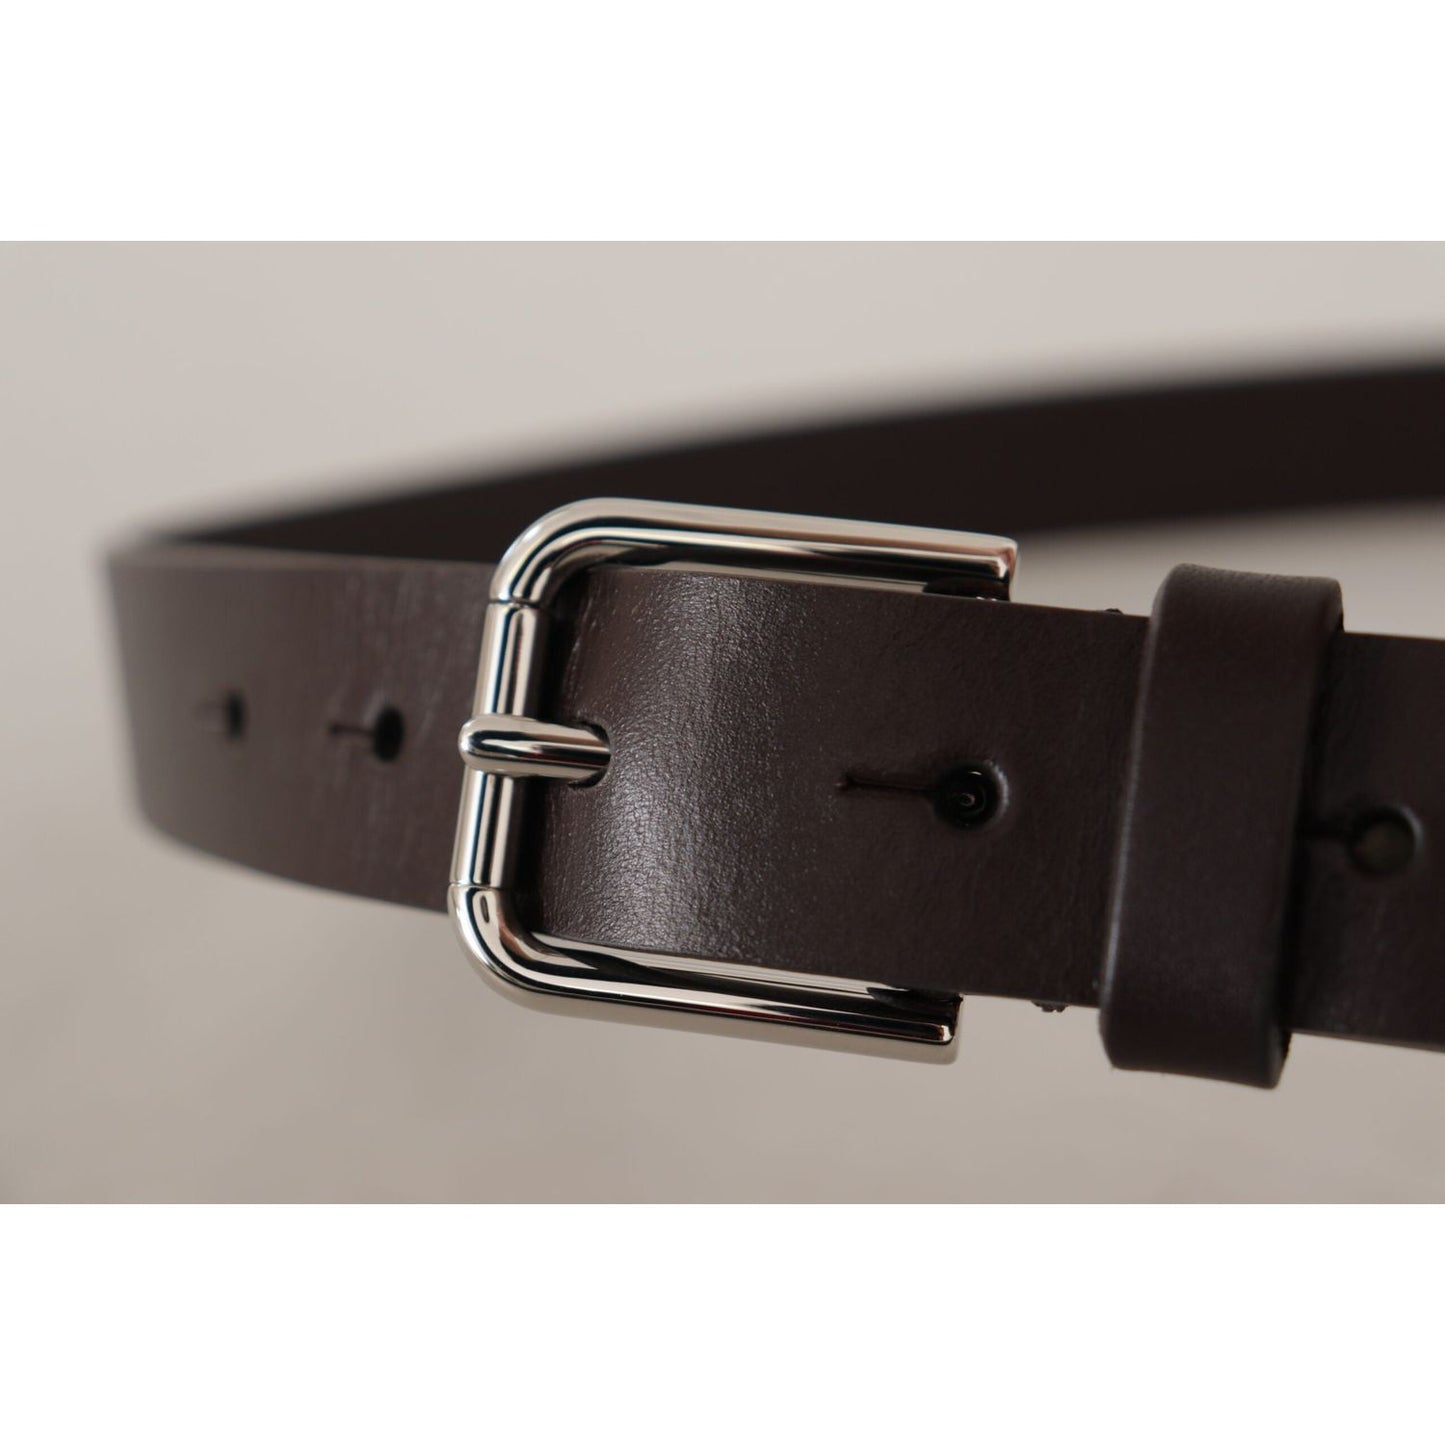 Dolce & Gabbana Elegant Leather Belt with Engraved Logo Buckle brown-plain-leather-silver-tone-buckle-belt